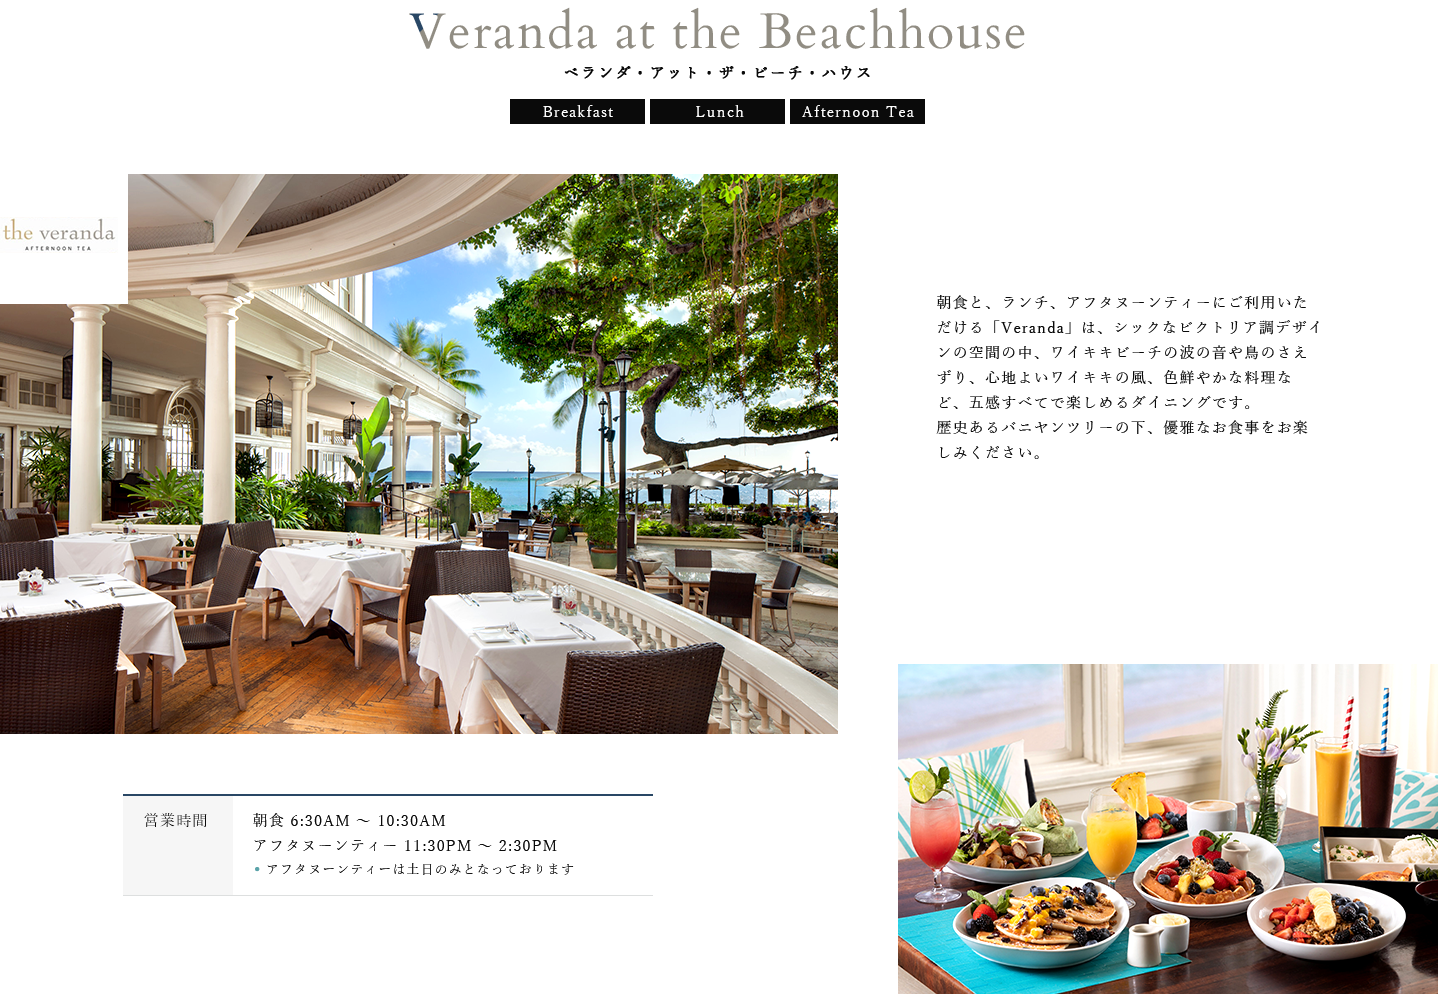 Veranda at the Beachhouse ベランダ・アット・ザ・ビーチ・ハウス